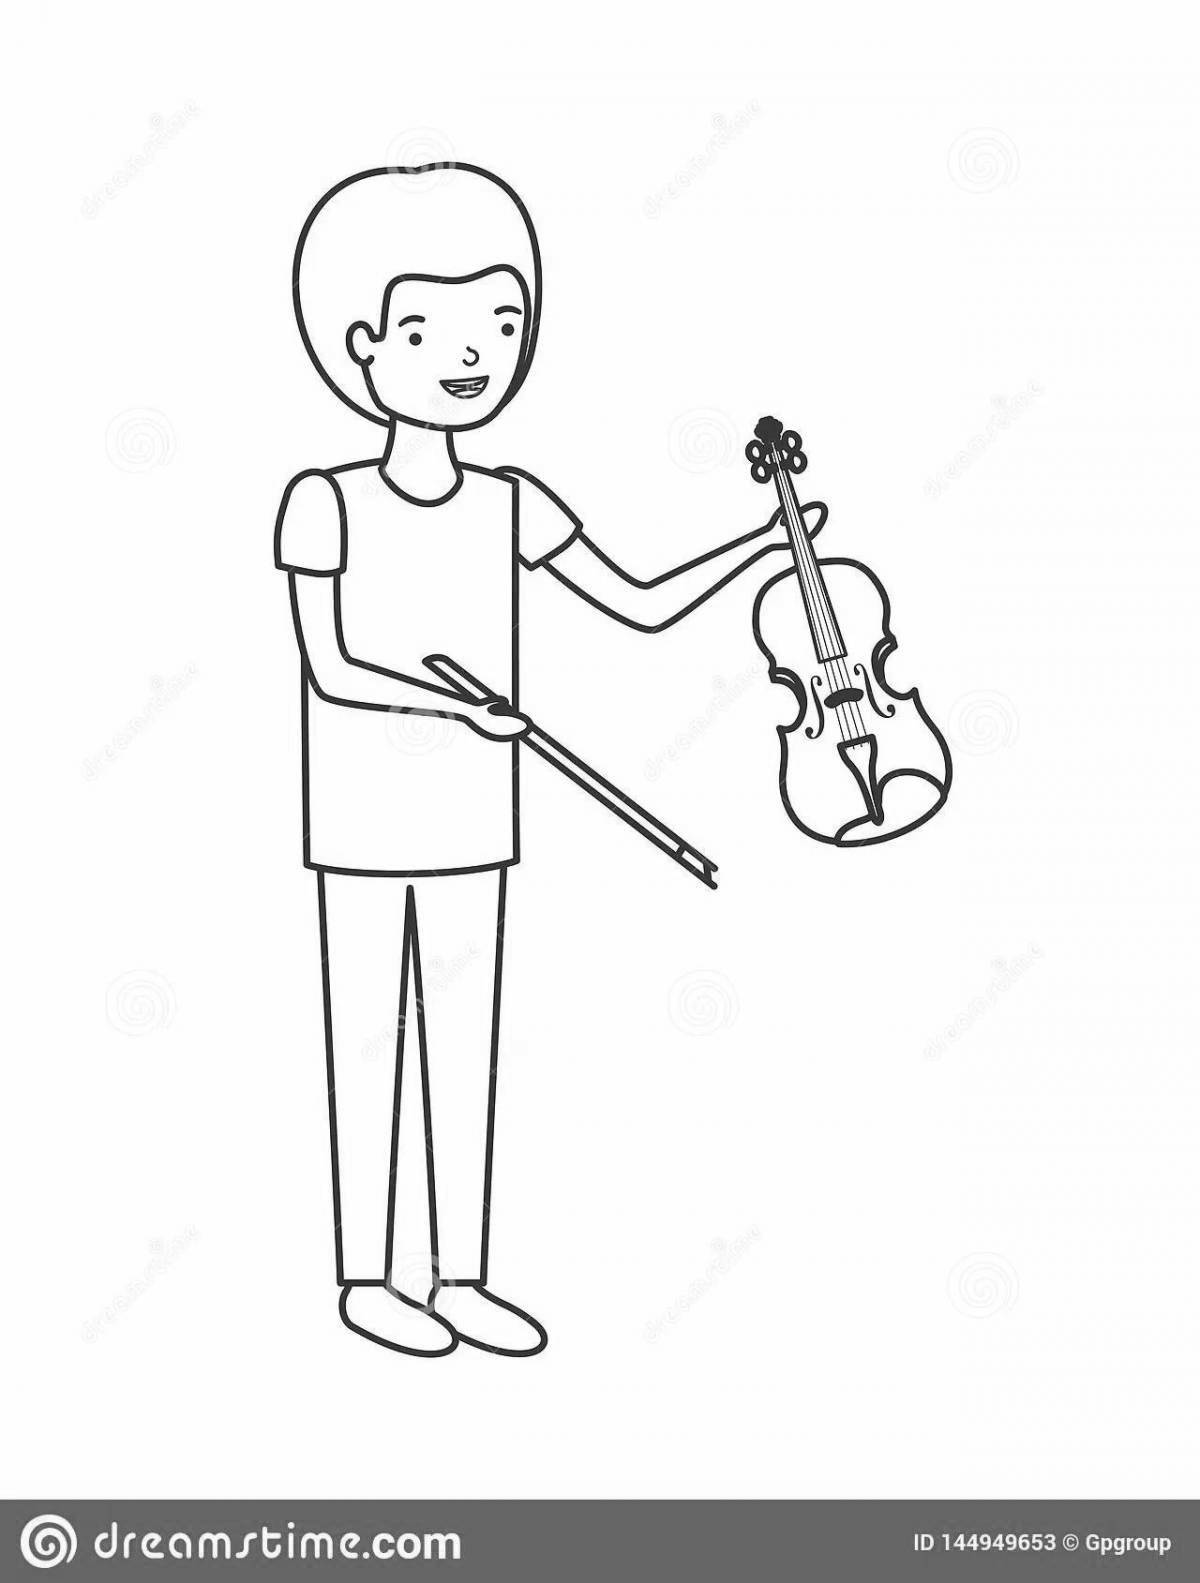 Energetic coloring boy with violin